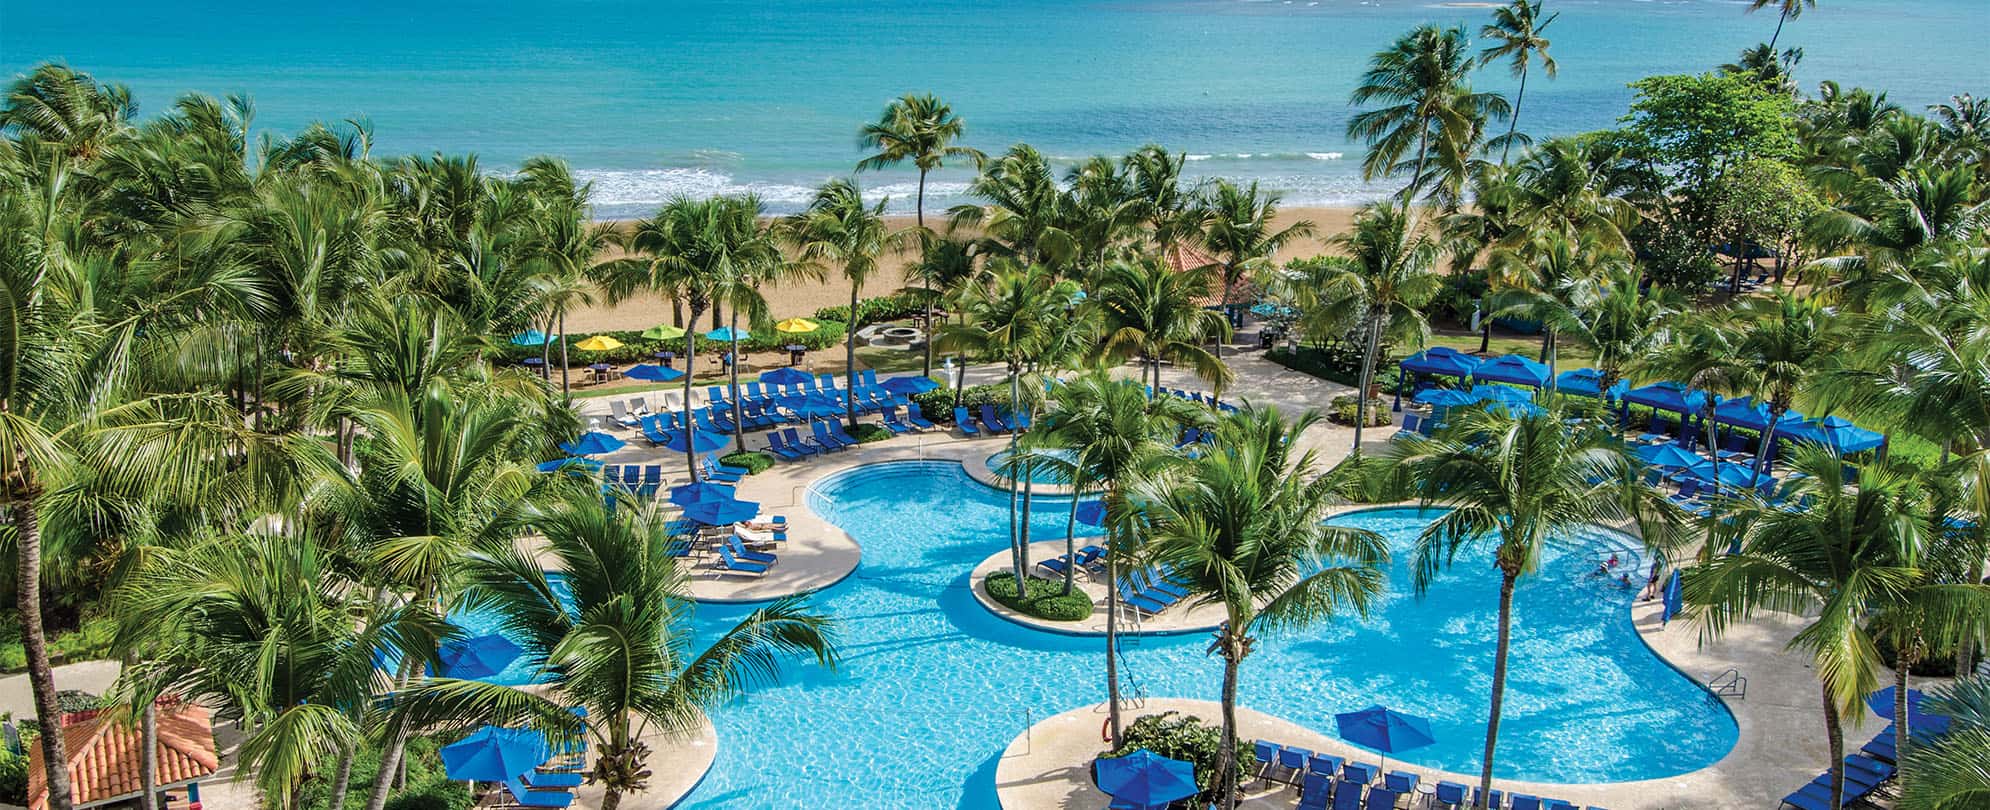 Explore Timeshare Resorts: Rio Mar, PR – Margaritaville Vacation Club